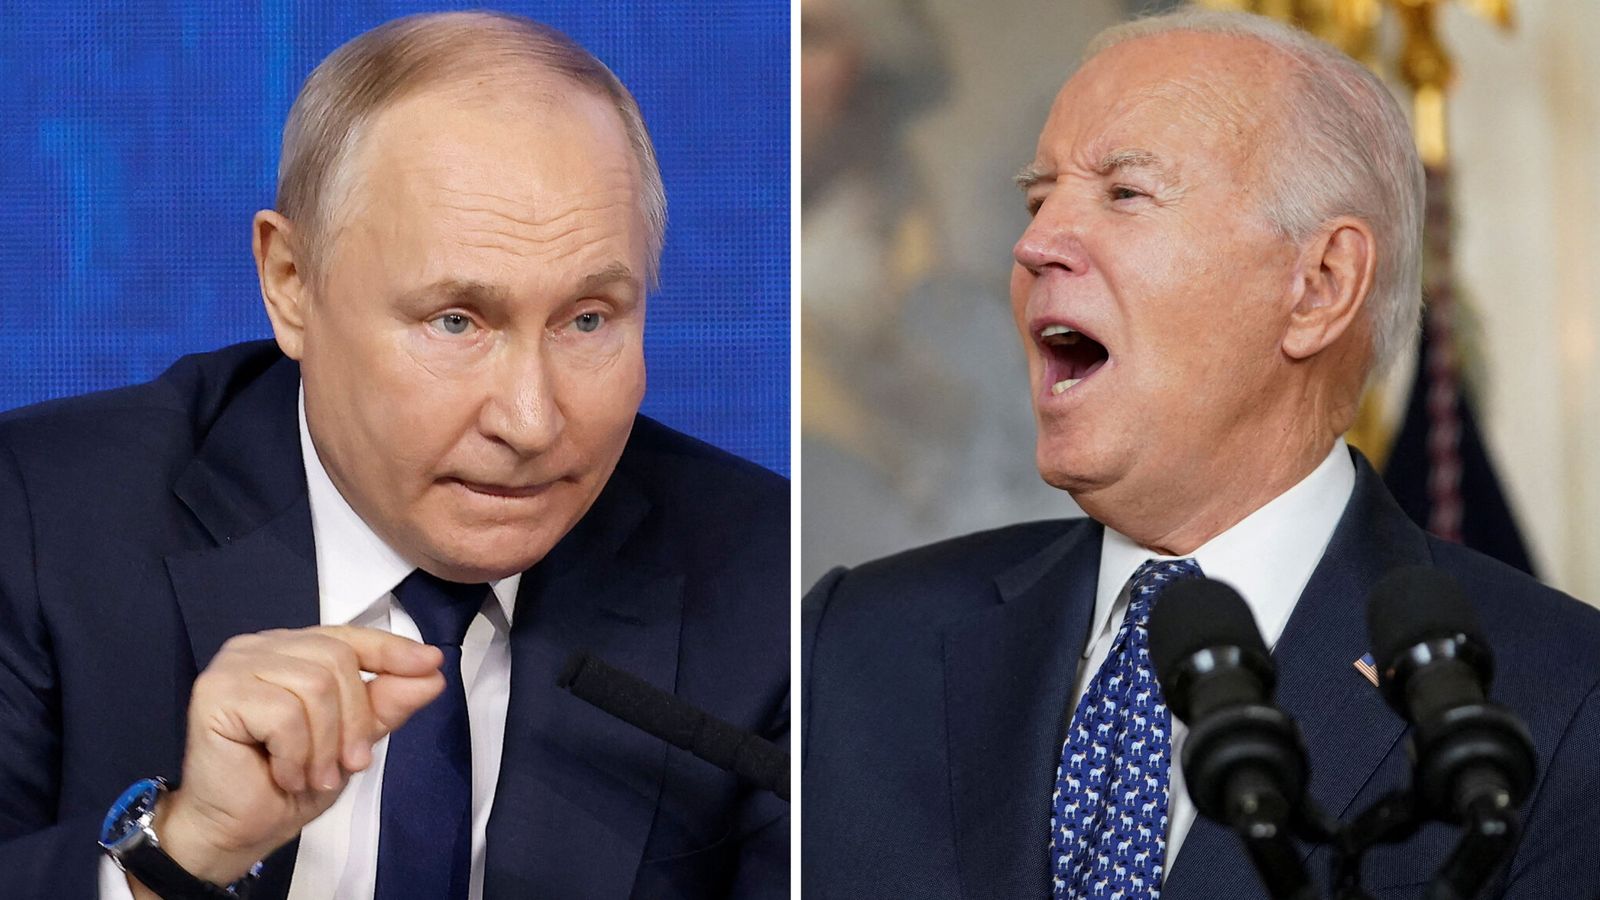 Joe Biden calls Vladimir Putin a 'crazy SOB' - and the Kremlin reacts